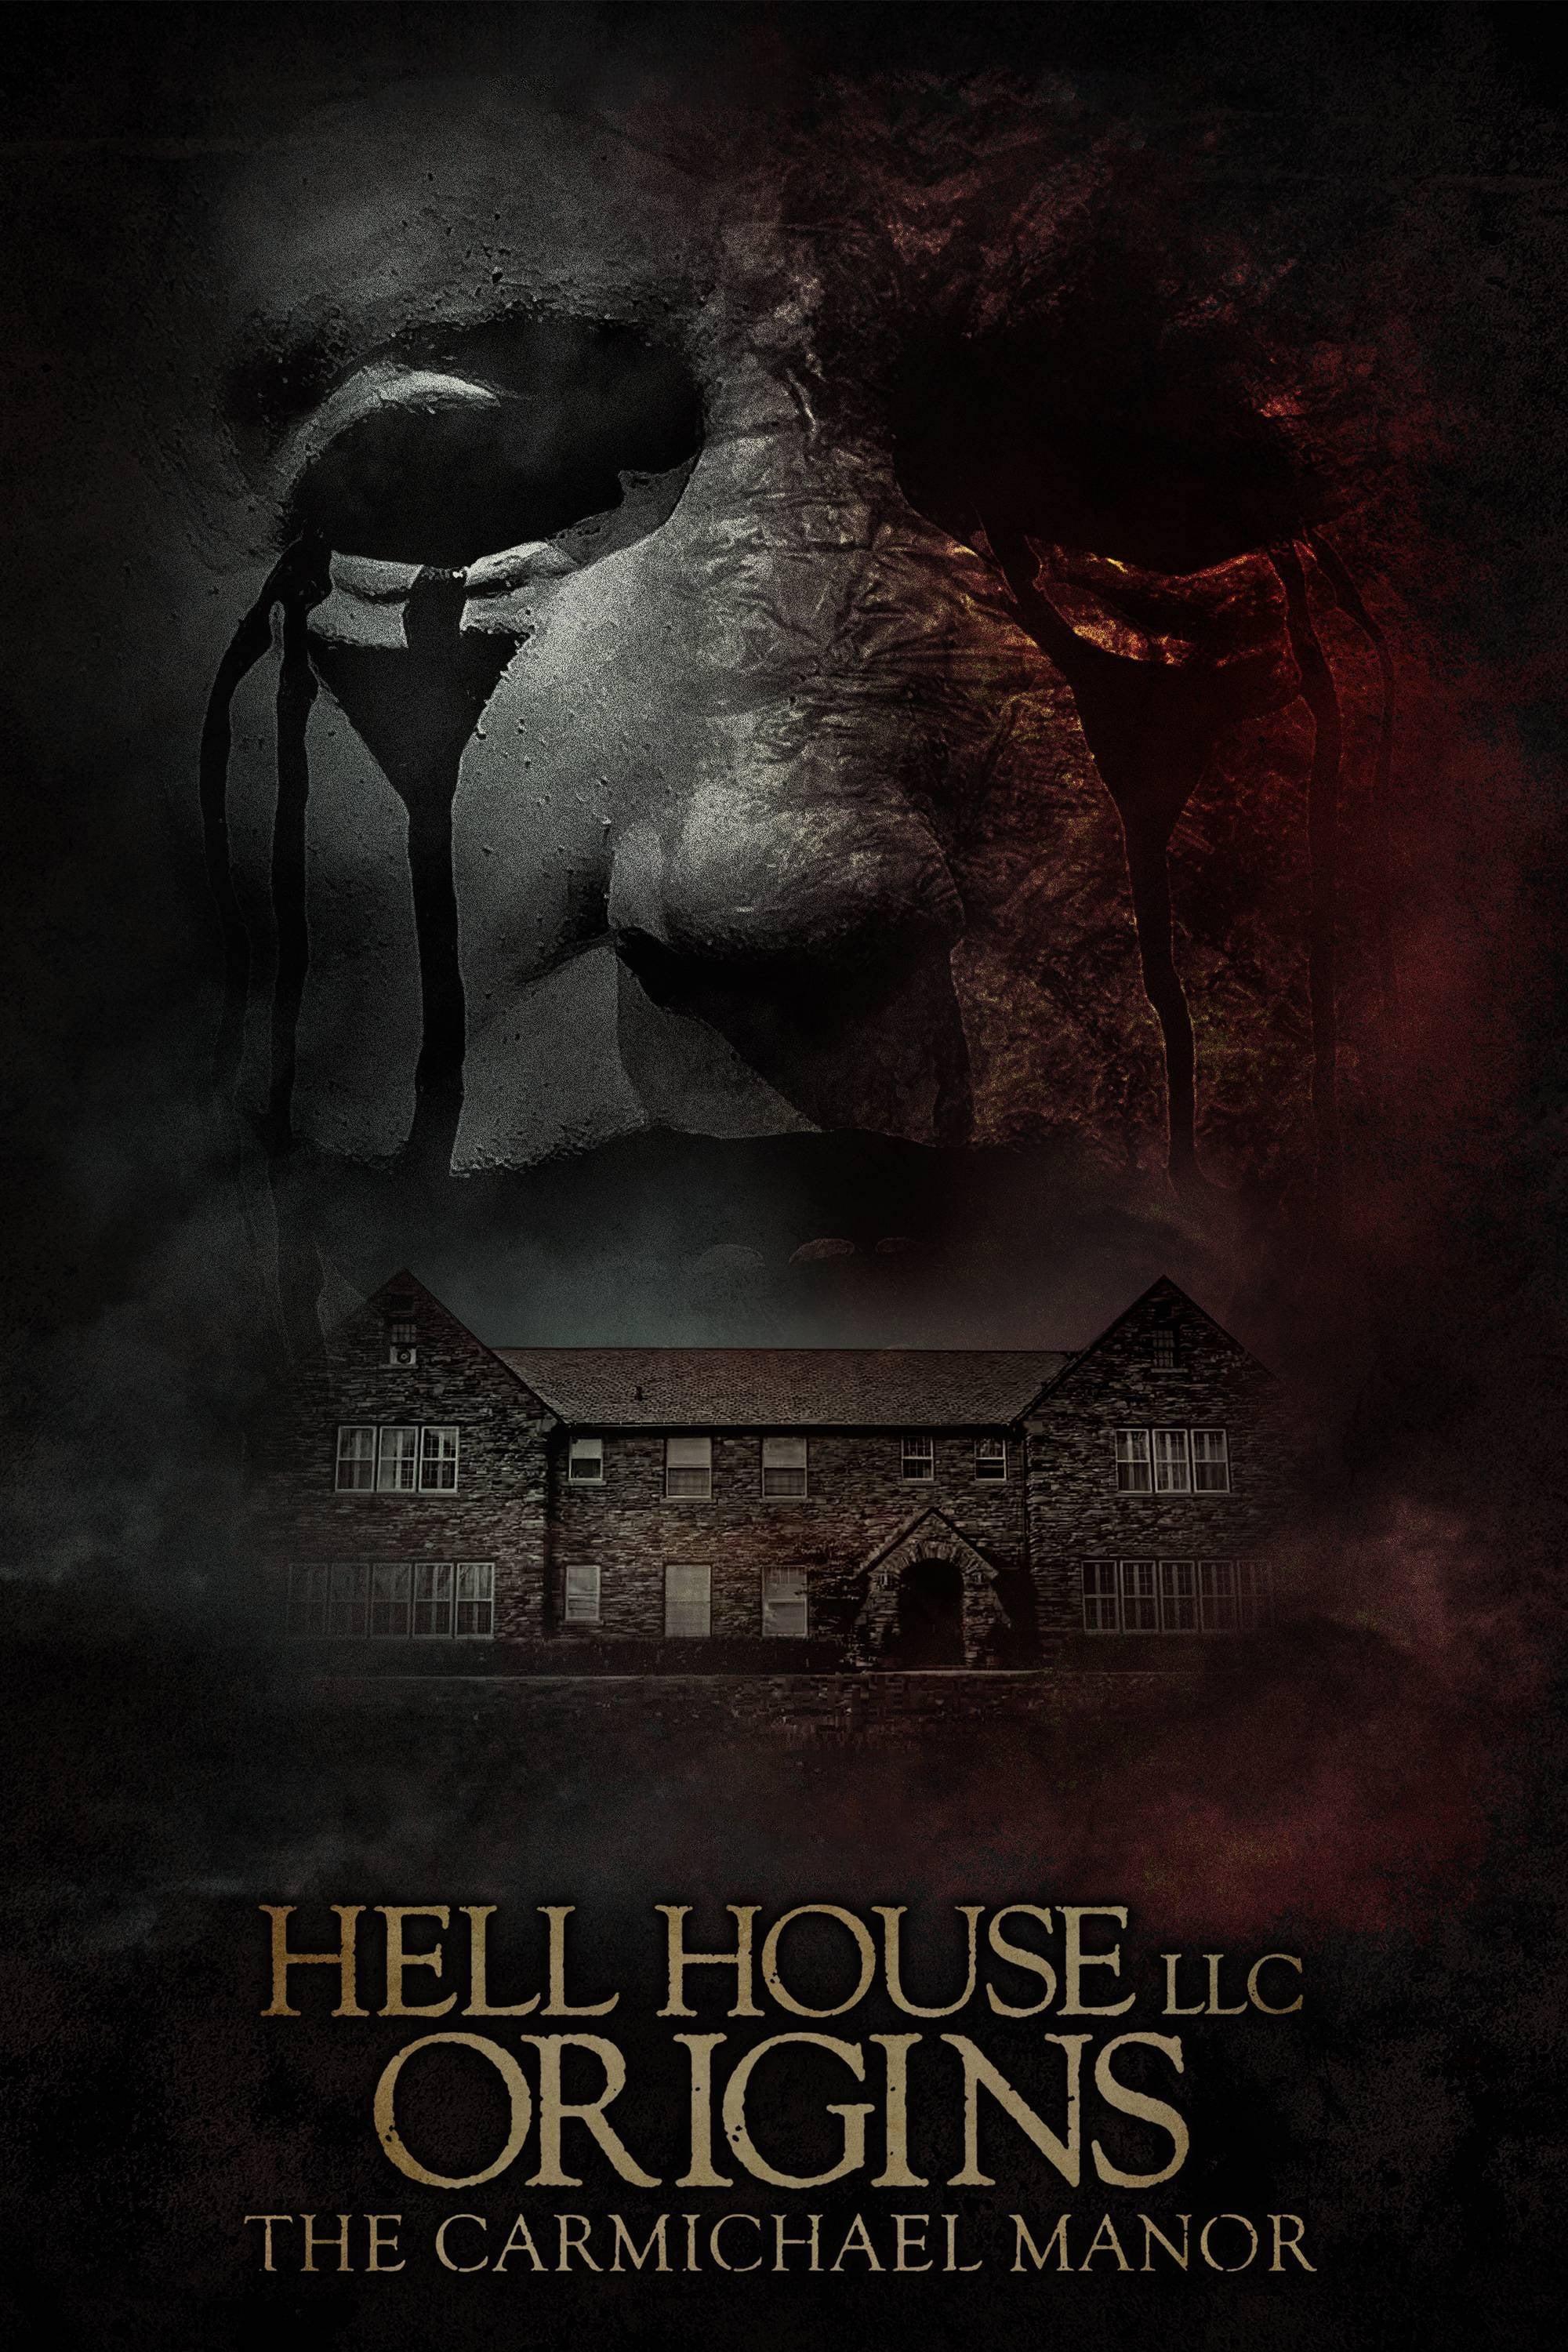 Hell House LLC Origins: The Carmichael Manor poster